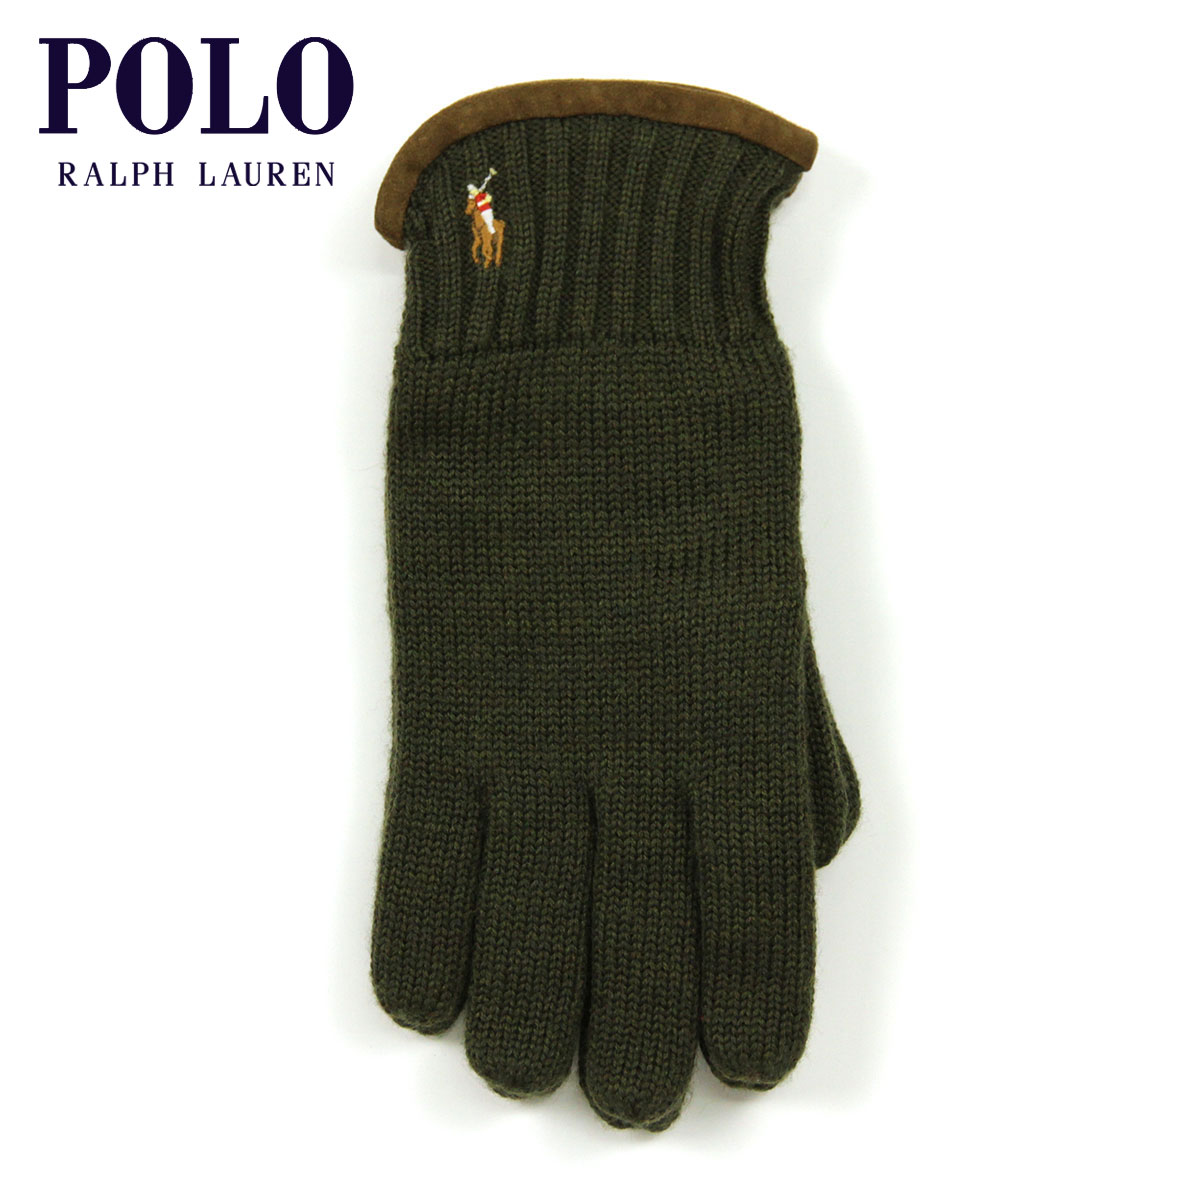  ̔ 11/19 10:00`11/24 09:59  | t[ POLO RALPH LAUREN Ki  Classic Merino Gloves OLIVE D20S30